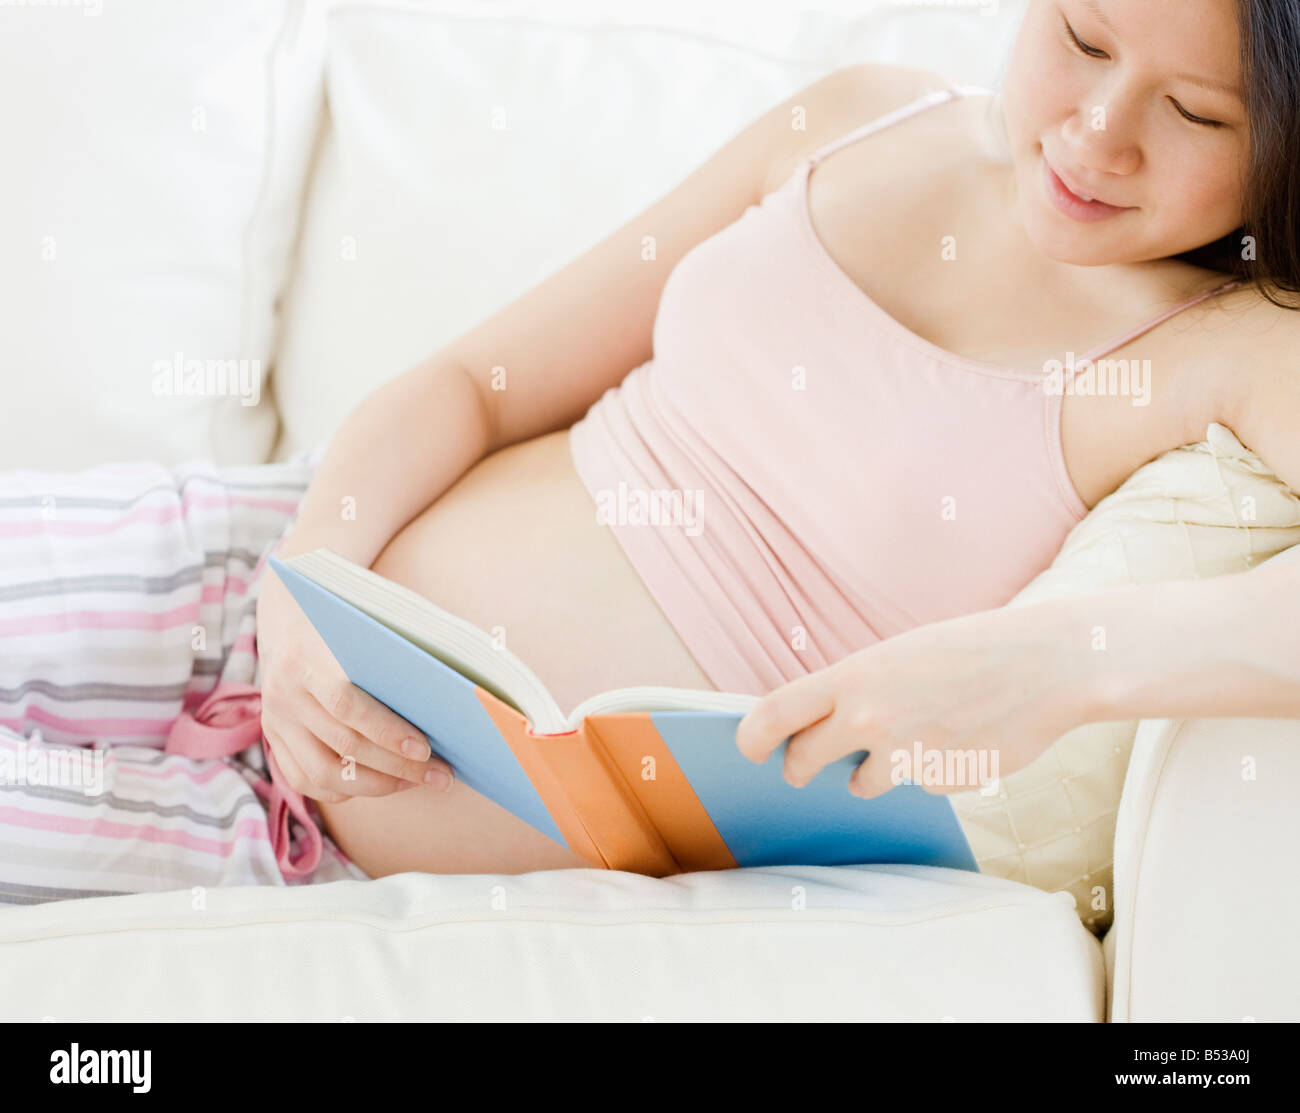 Pregnant Asian woman reading book Stock Photo